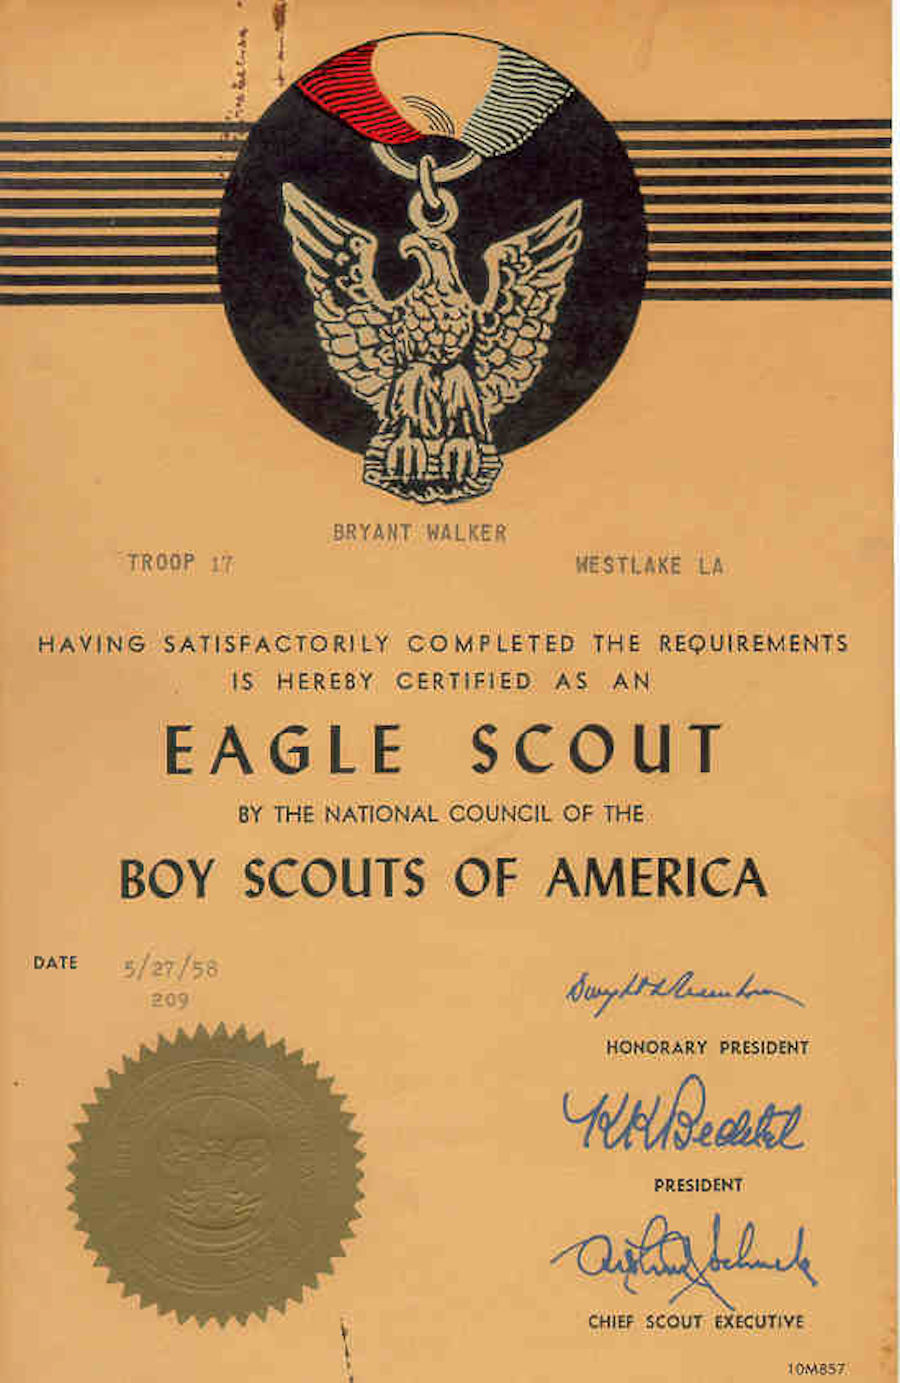 Bryant Walker's Eagle Scout